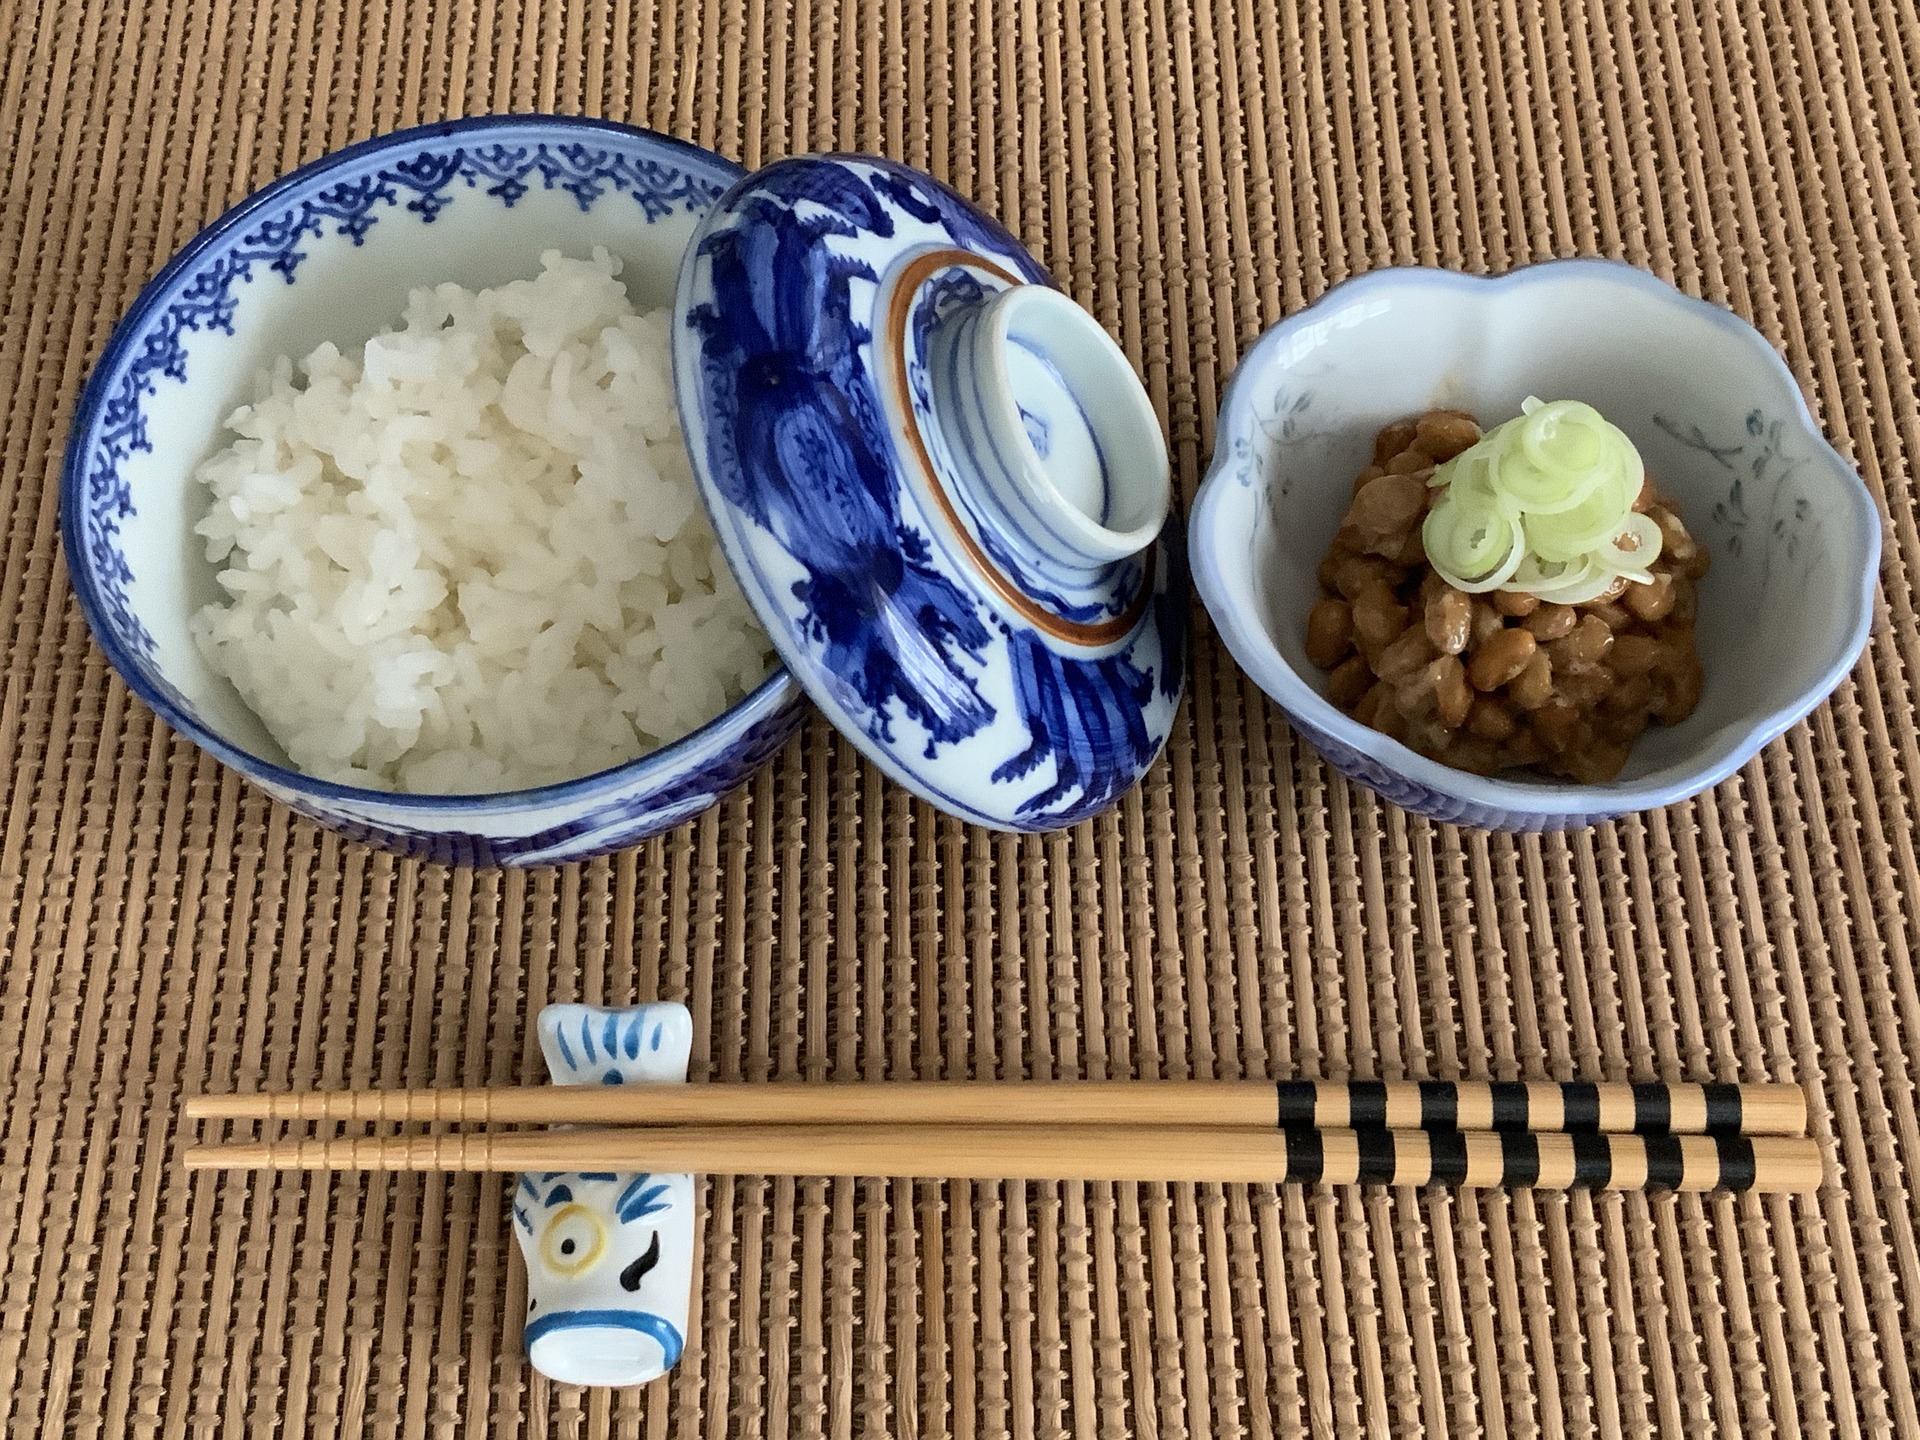 ILUSTRASI - Cara menyiapkan sarapan ala orang Jepang